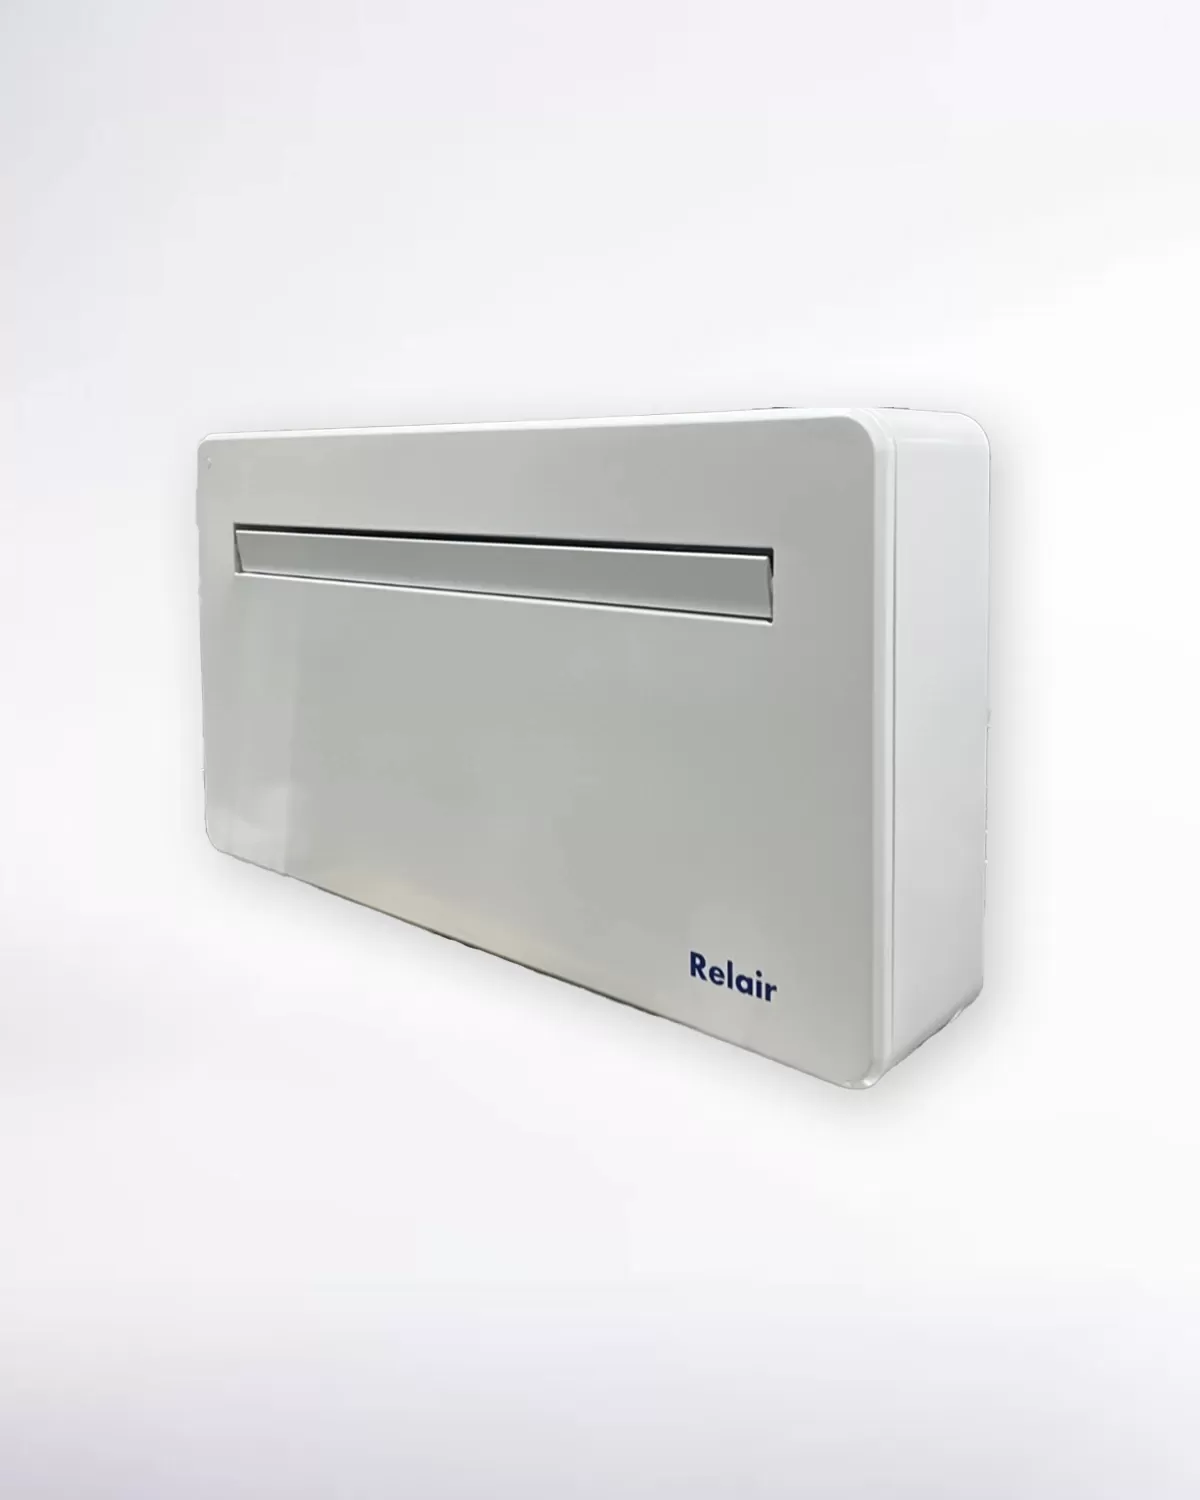 Relair air conditioning unit